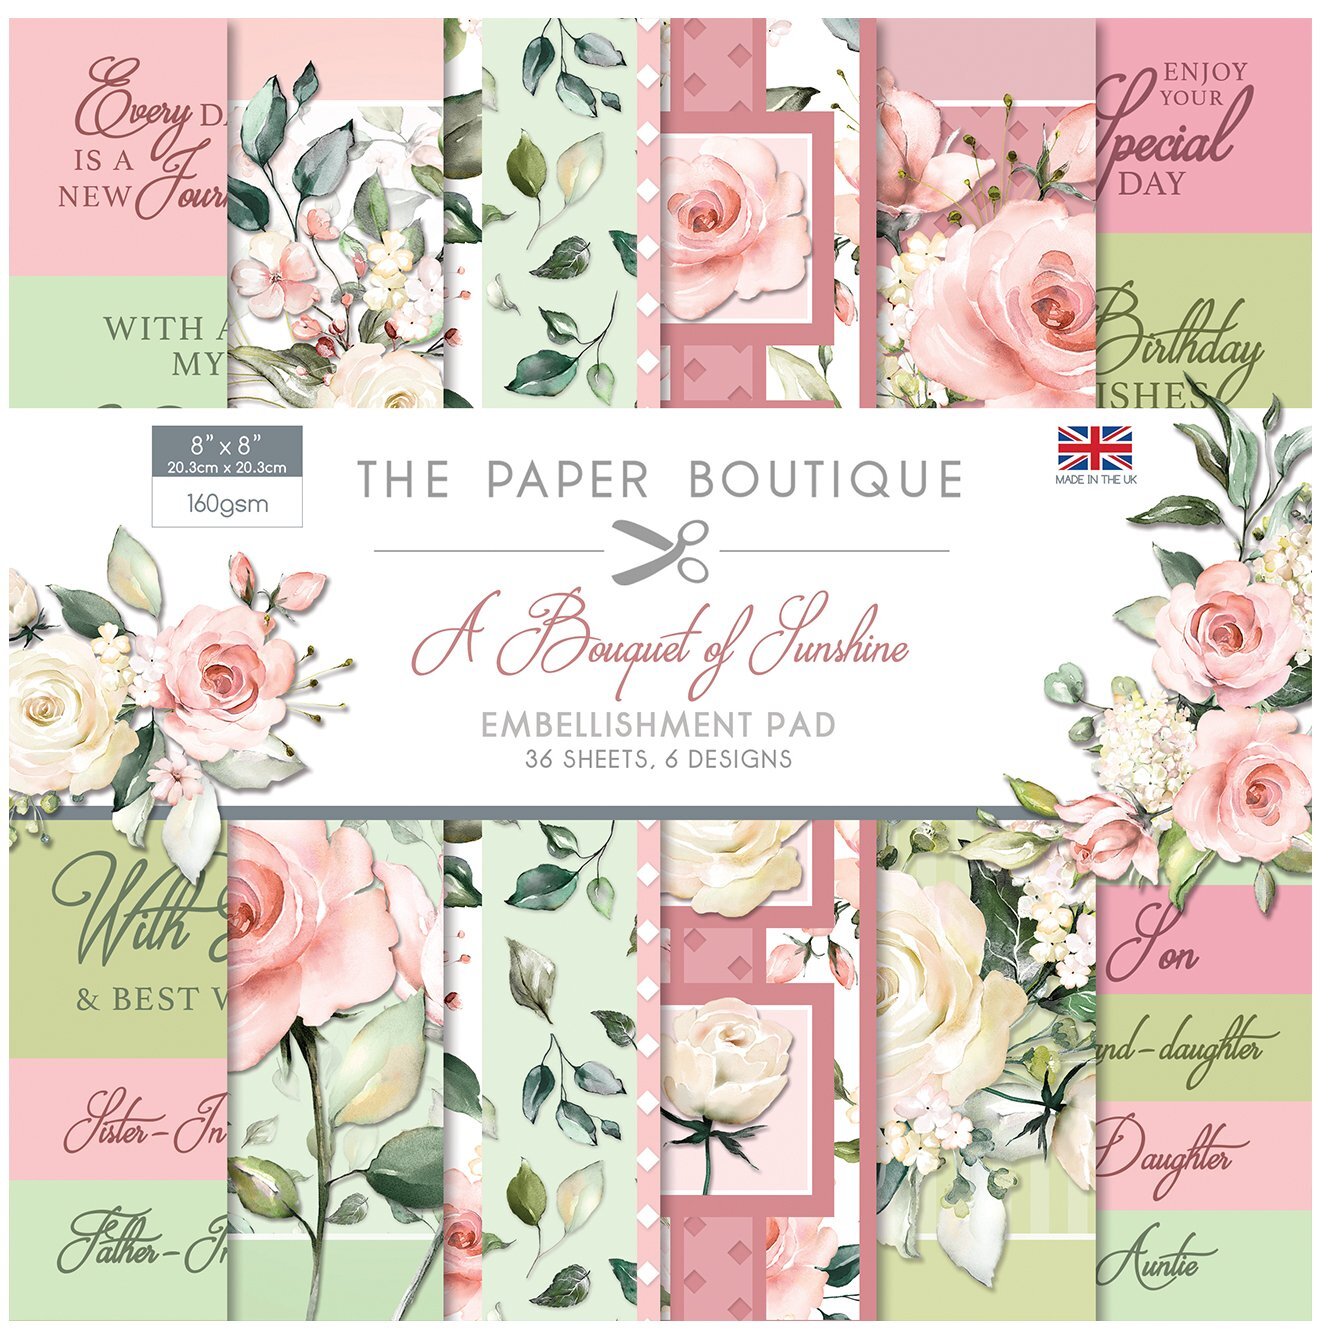 The Paper Boutique A Bouquet of Sunshine 8x8 Embellishments Pad 36 Sheets